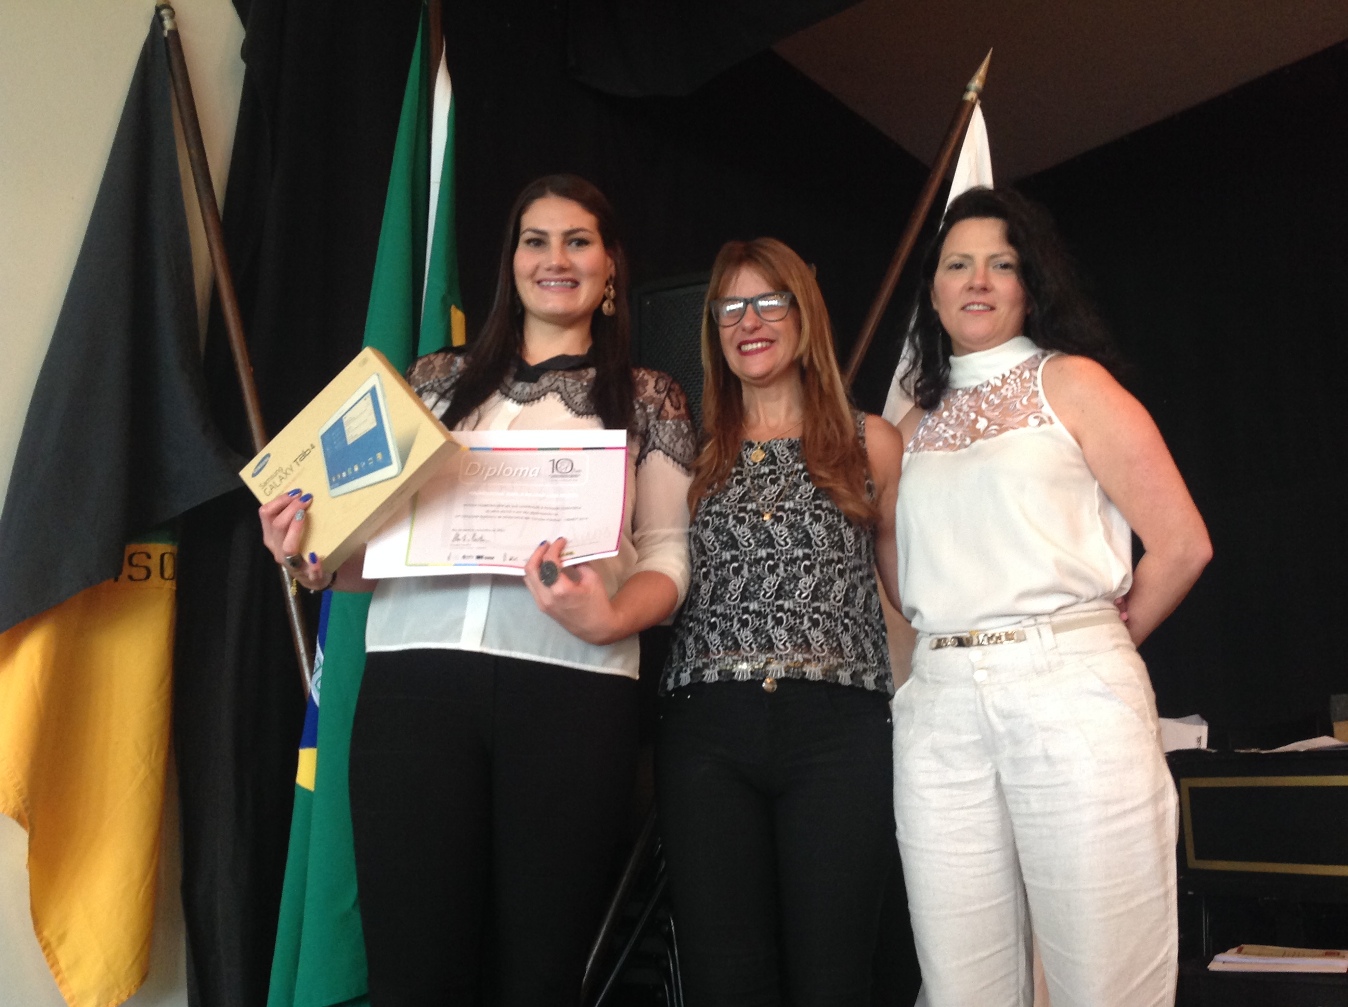 Entrega de tablet à professora premiada Karla Rejane Lima Maciel - Ouro Preto